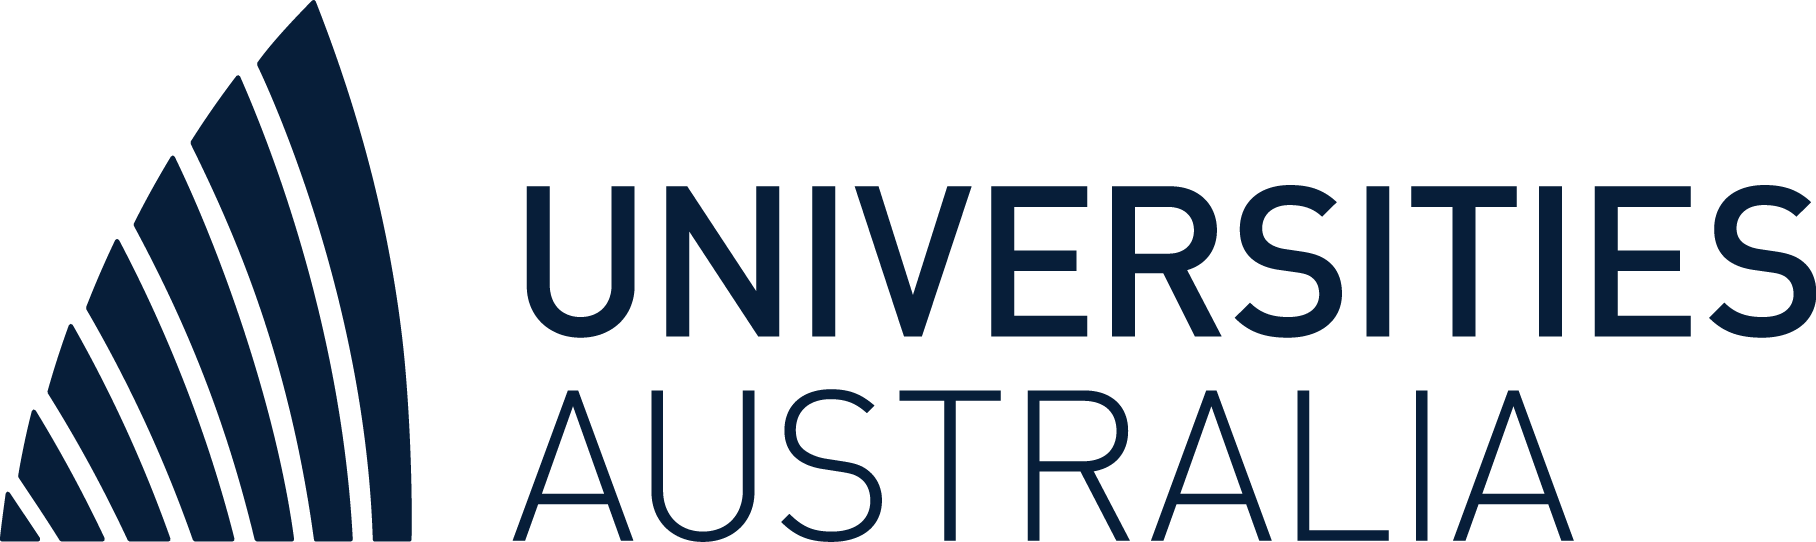 Logo for “Universities Australia“